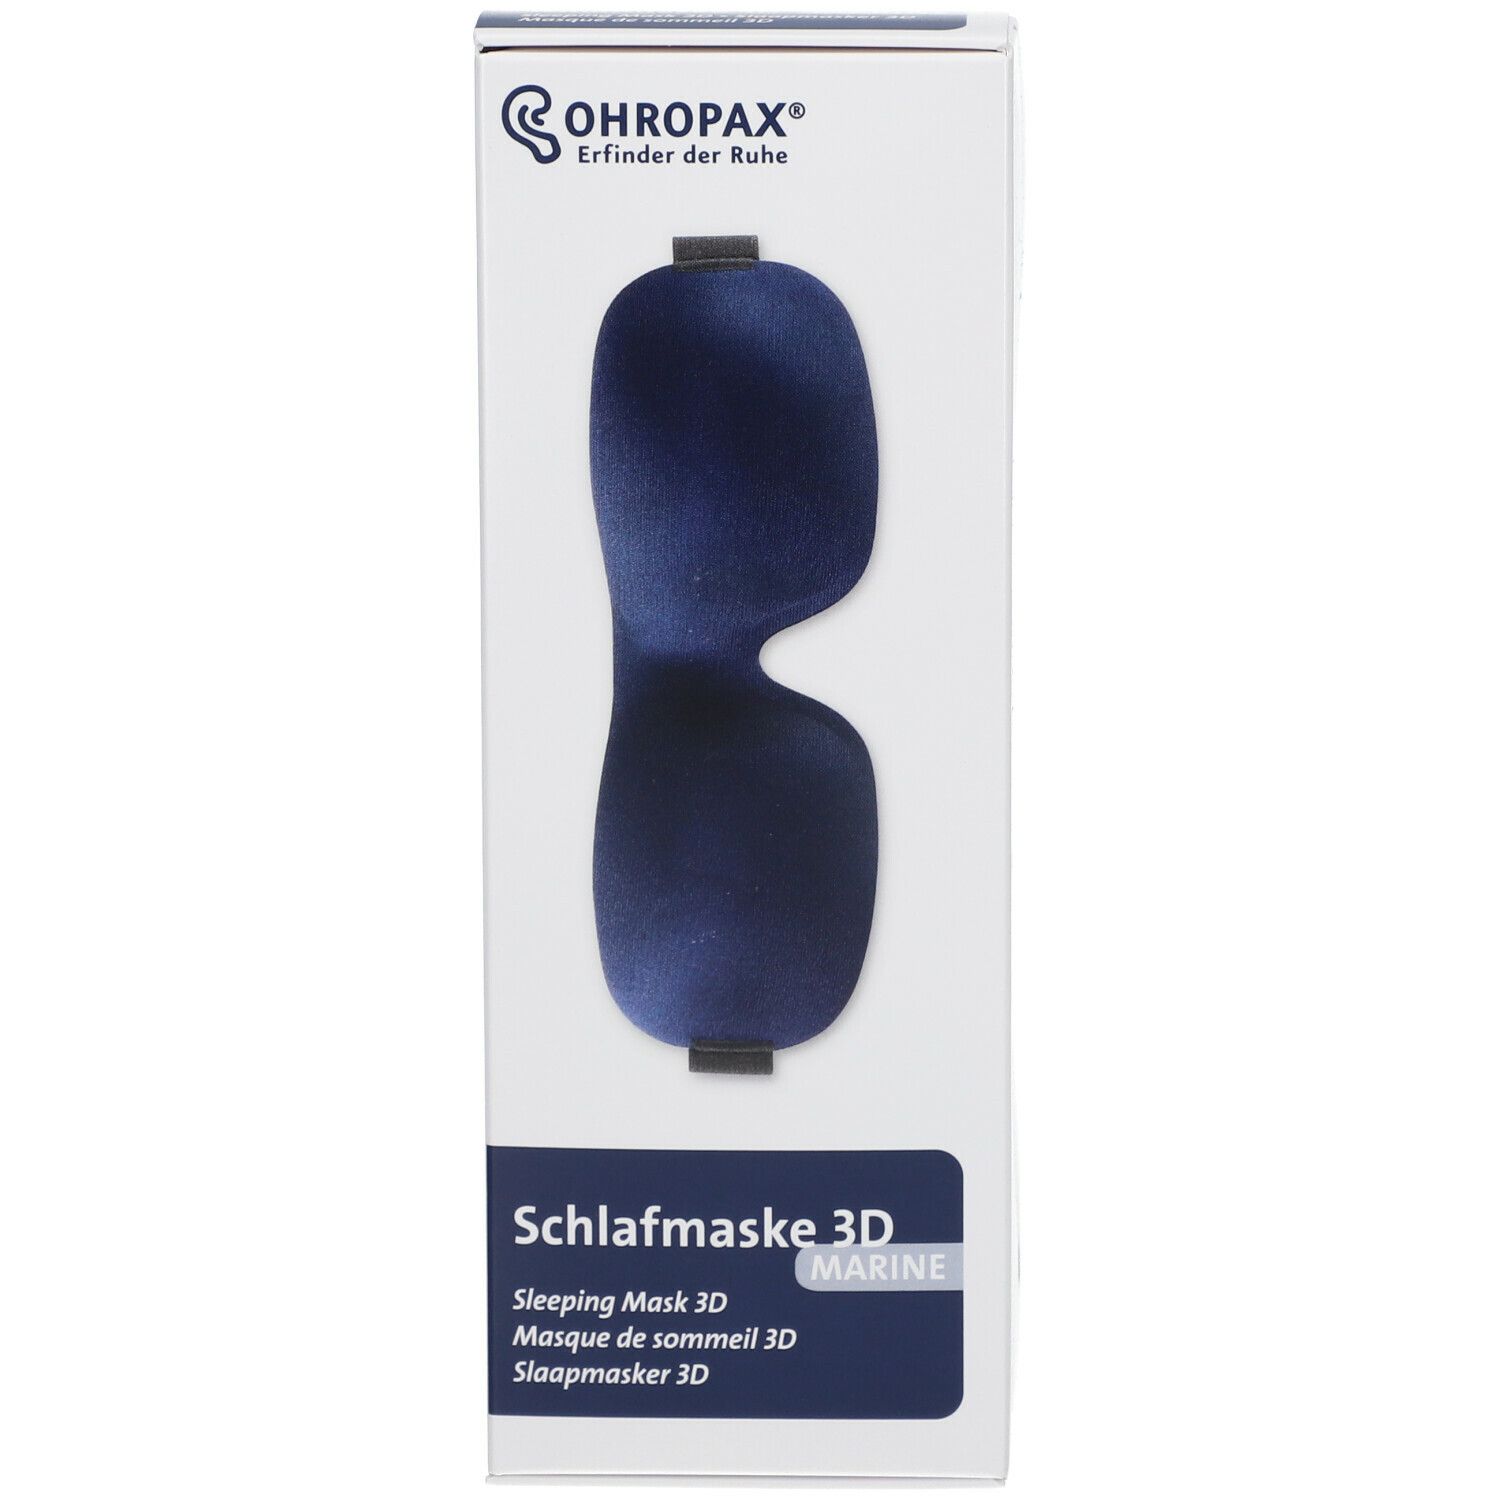 Ohropax® sleep mask 3D